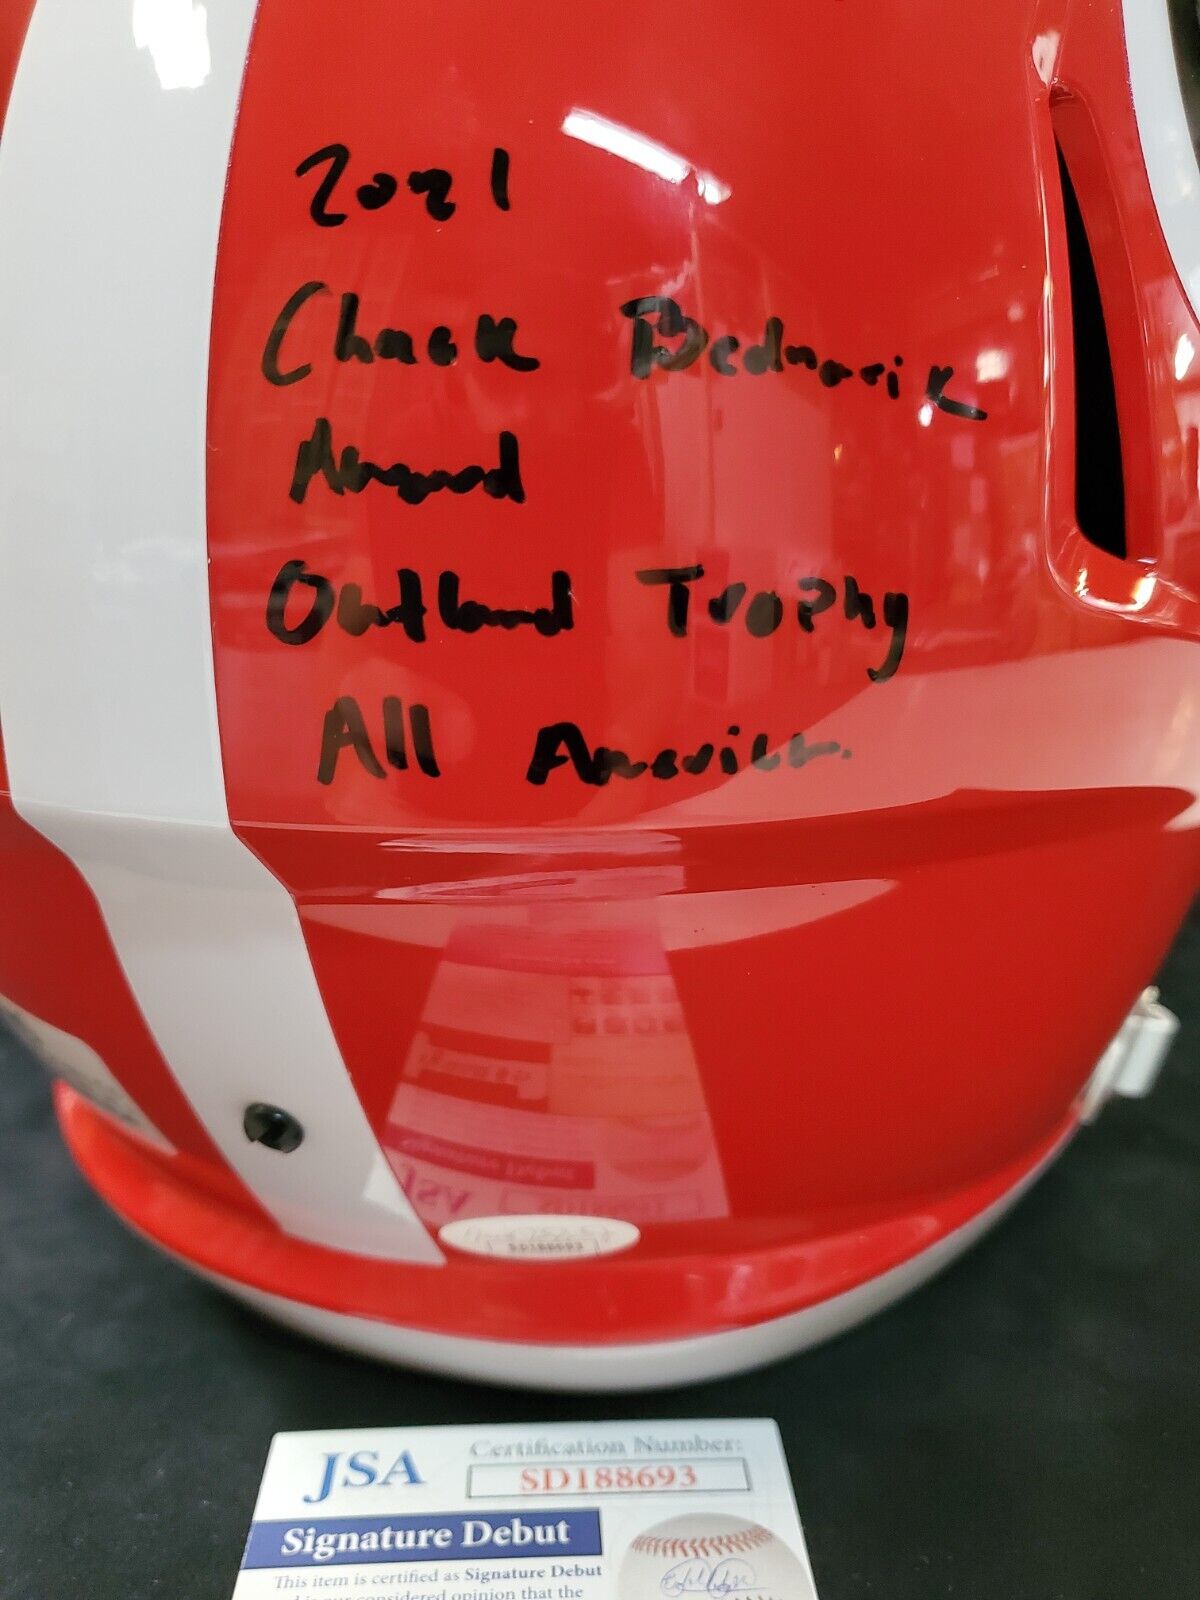 MVP Authentics Georgia Bulldogs Jordan Davis Signed 4X Inscribed Full Size Replica Helmet Jsa 382.50 sports jersey framing , jersey framing